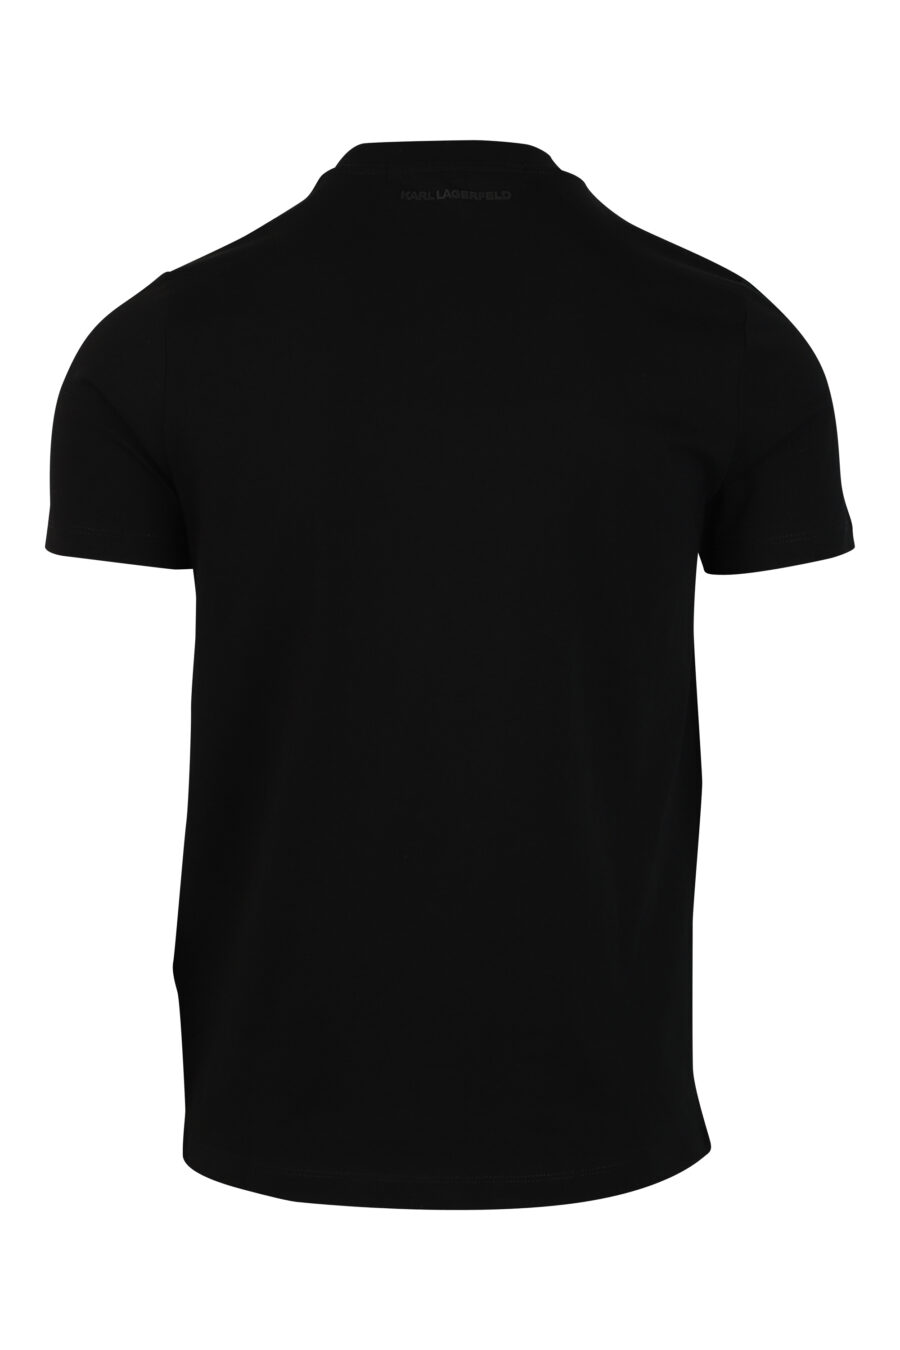 Camiseta negra con maxilogo en silueta negro - 4062226286657 2